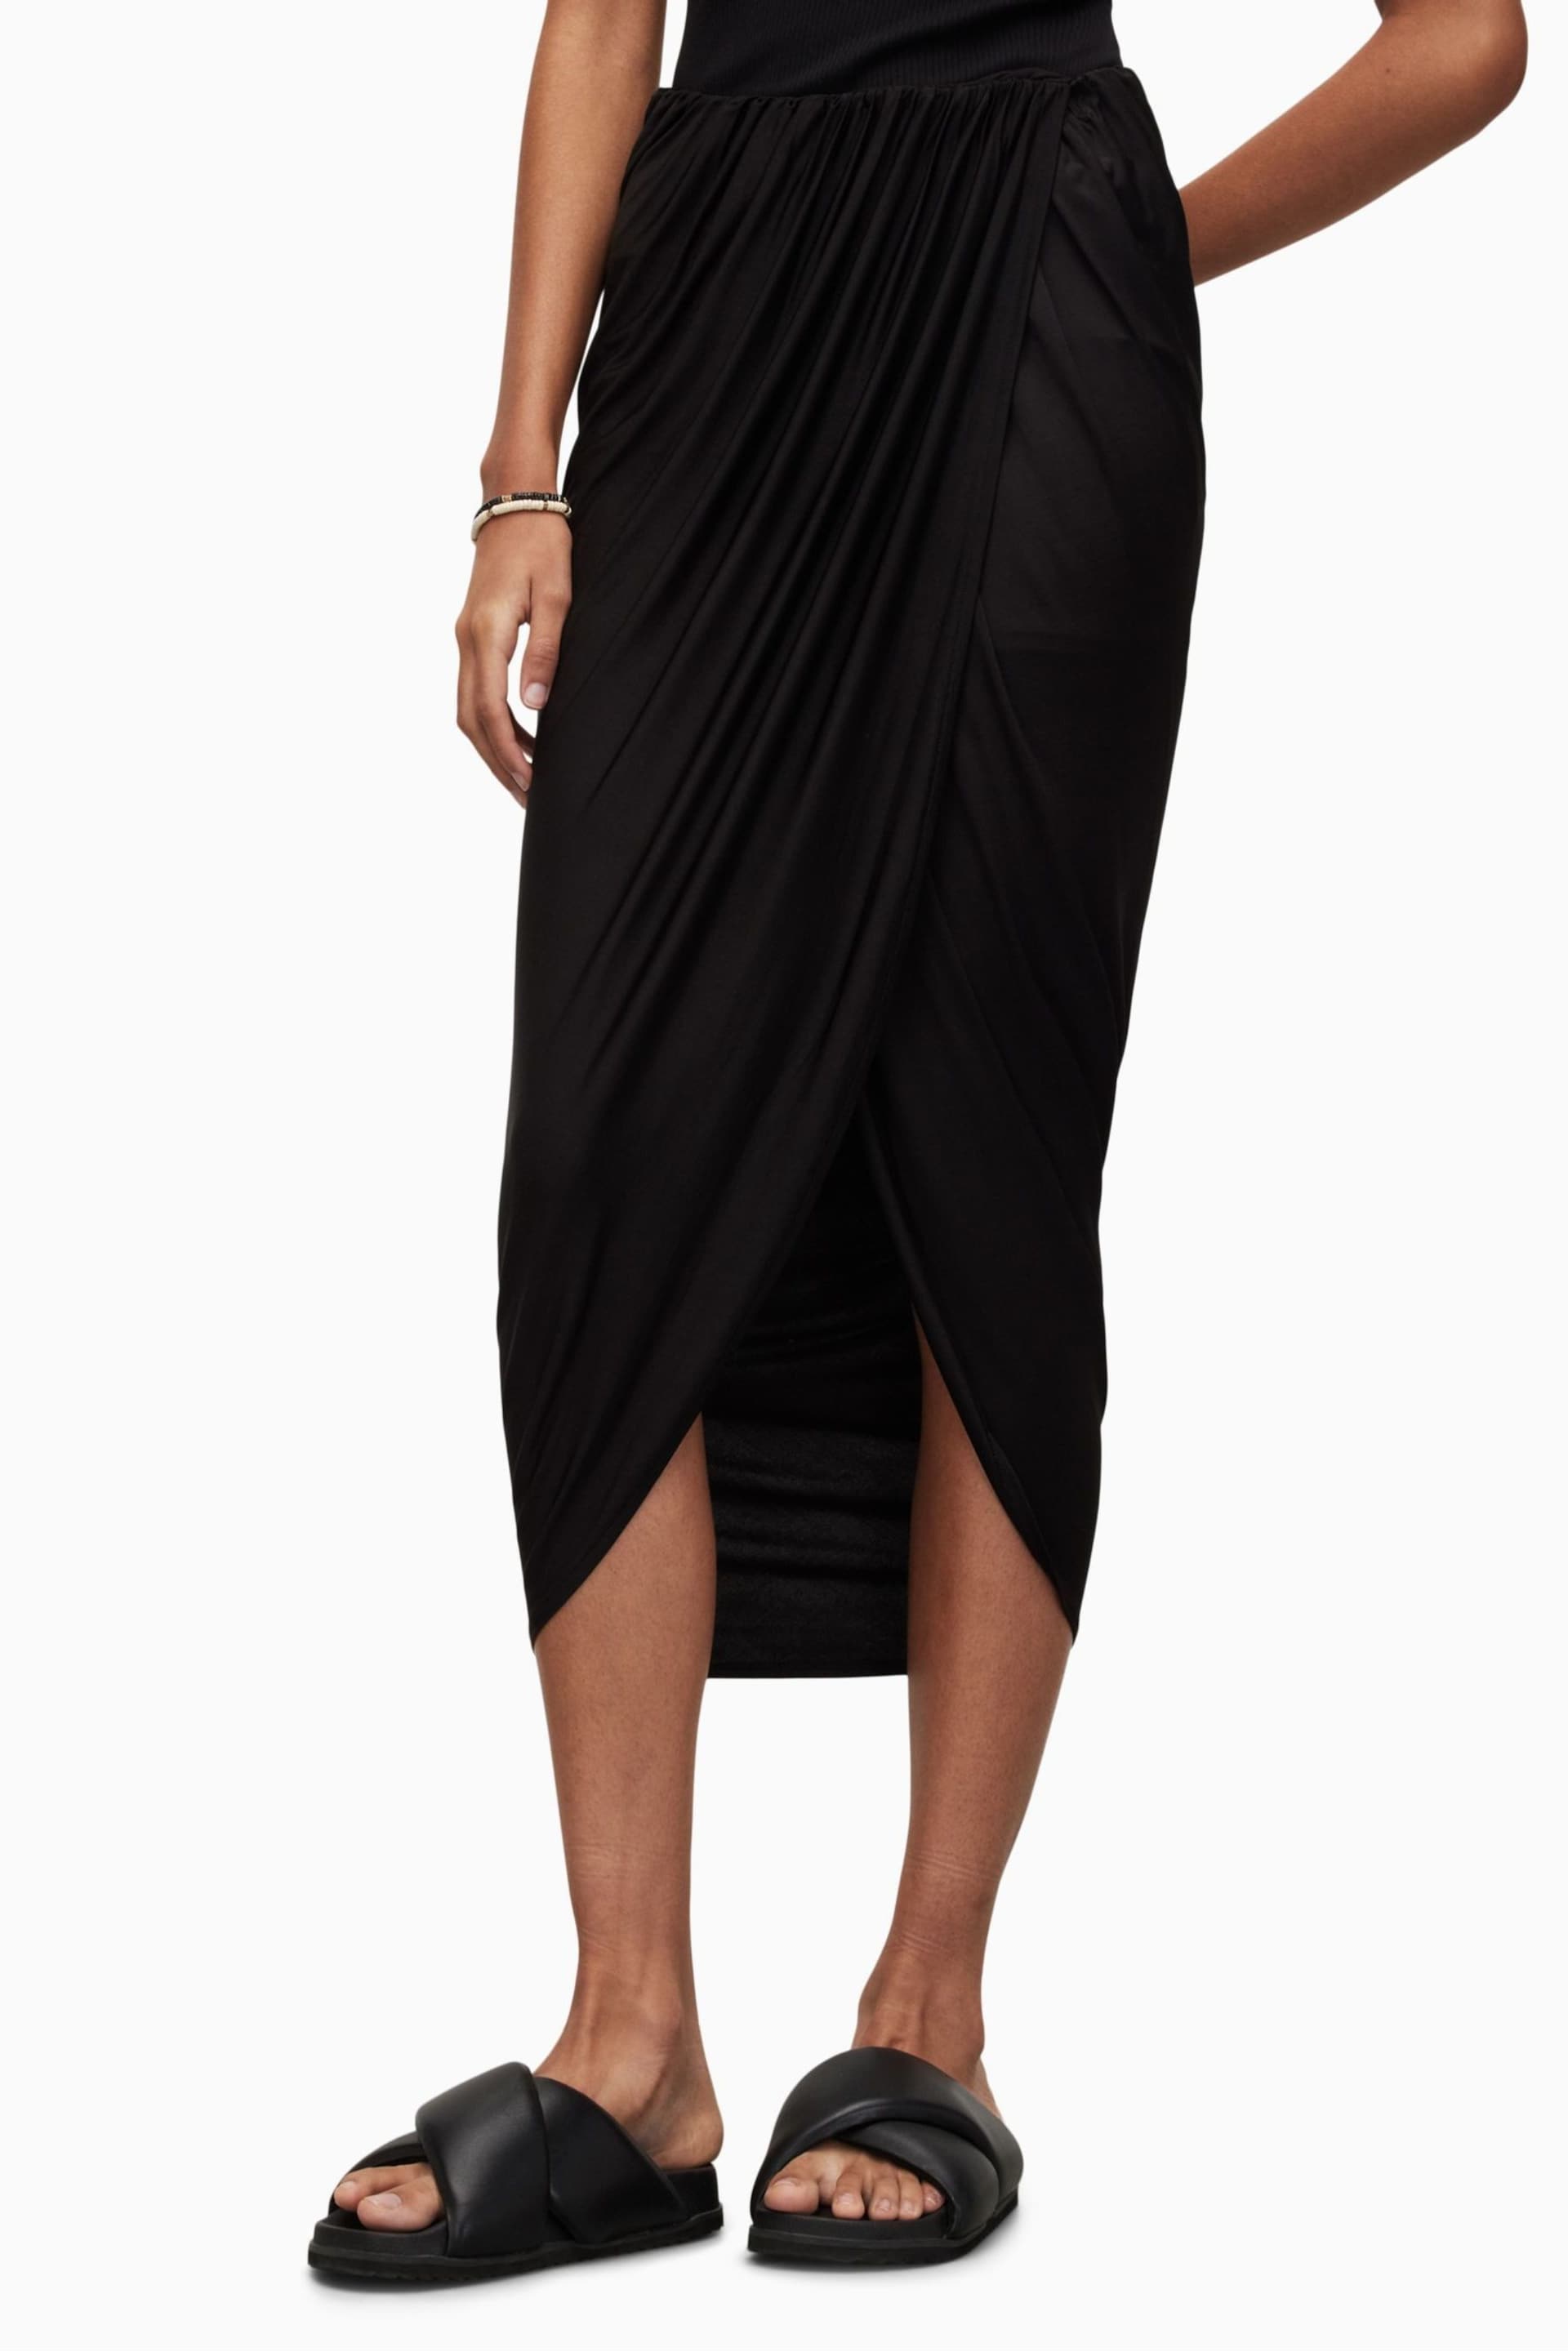 AllSaints Black Aurelia Skirt - Image 4 of 6